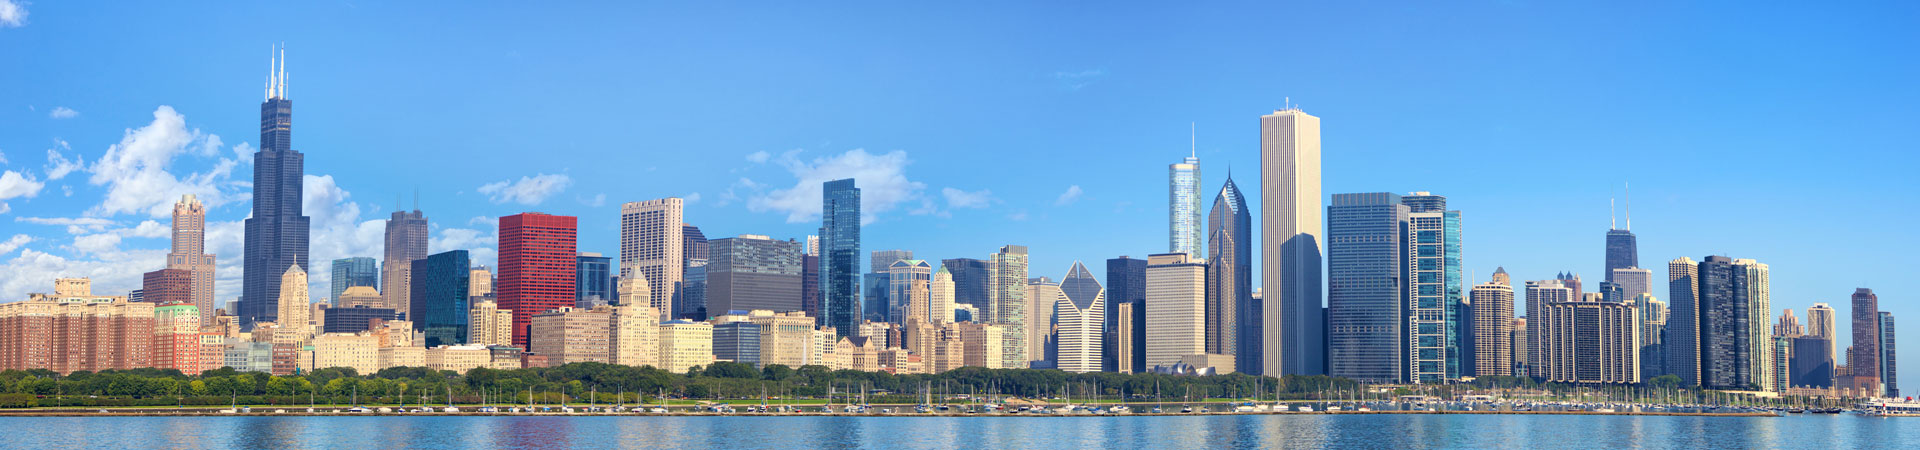 Panoramic image of Chicago's skyline